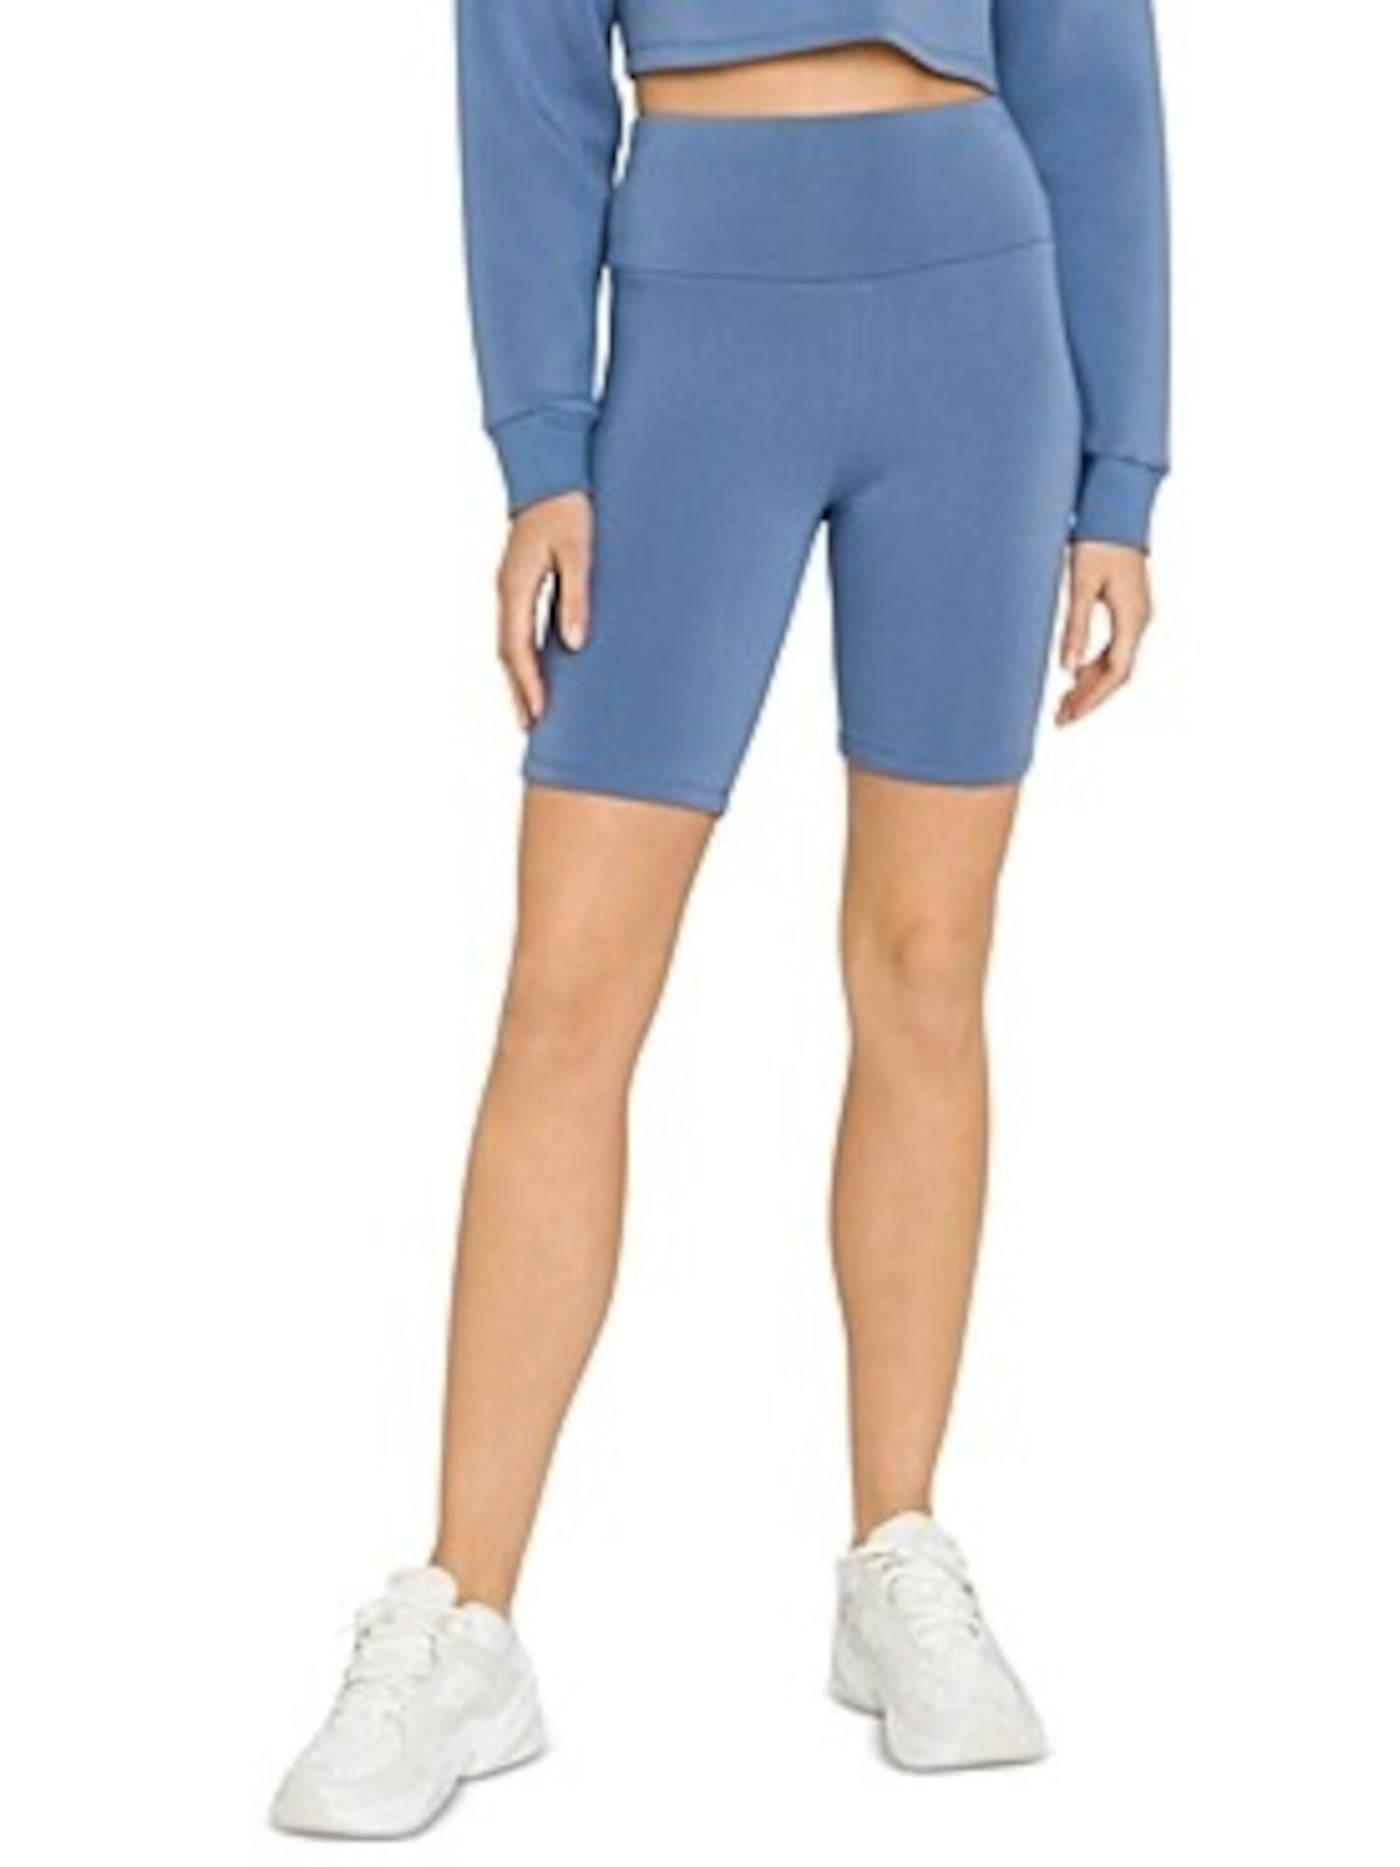 GREY LAB Womens Blue Stretch Heather Active Wear Skinny Shorts S